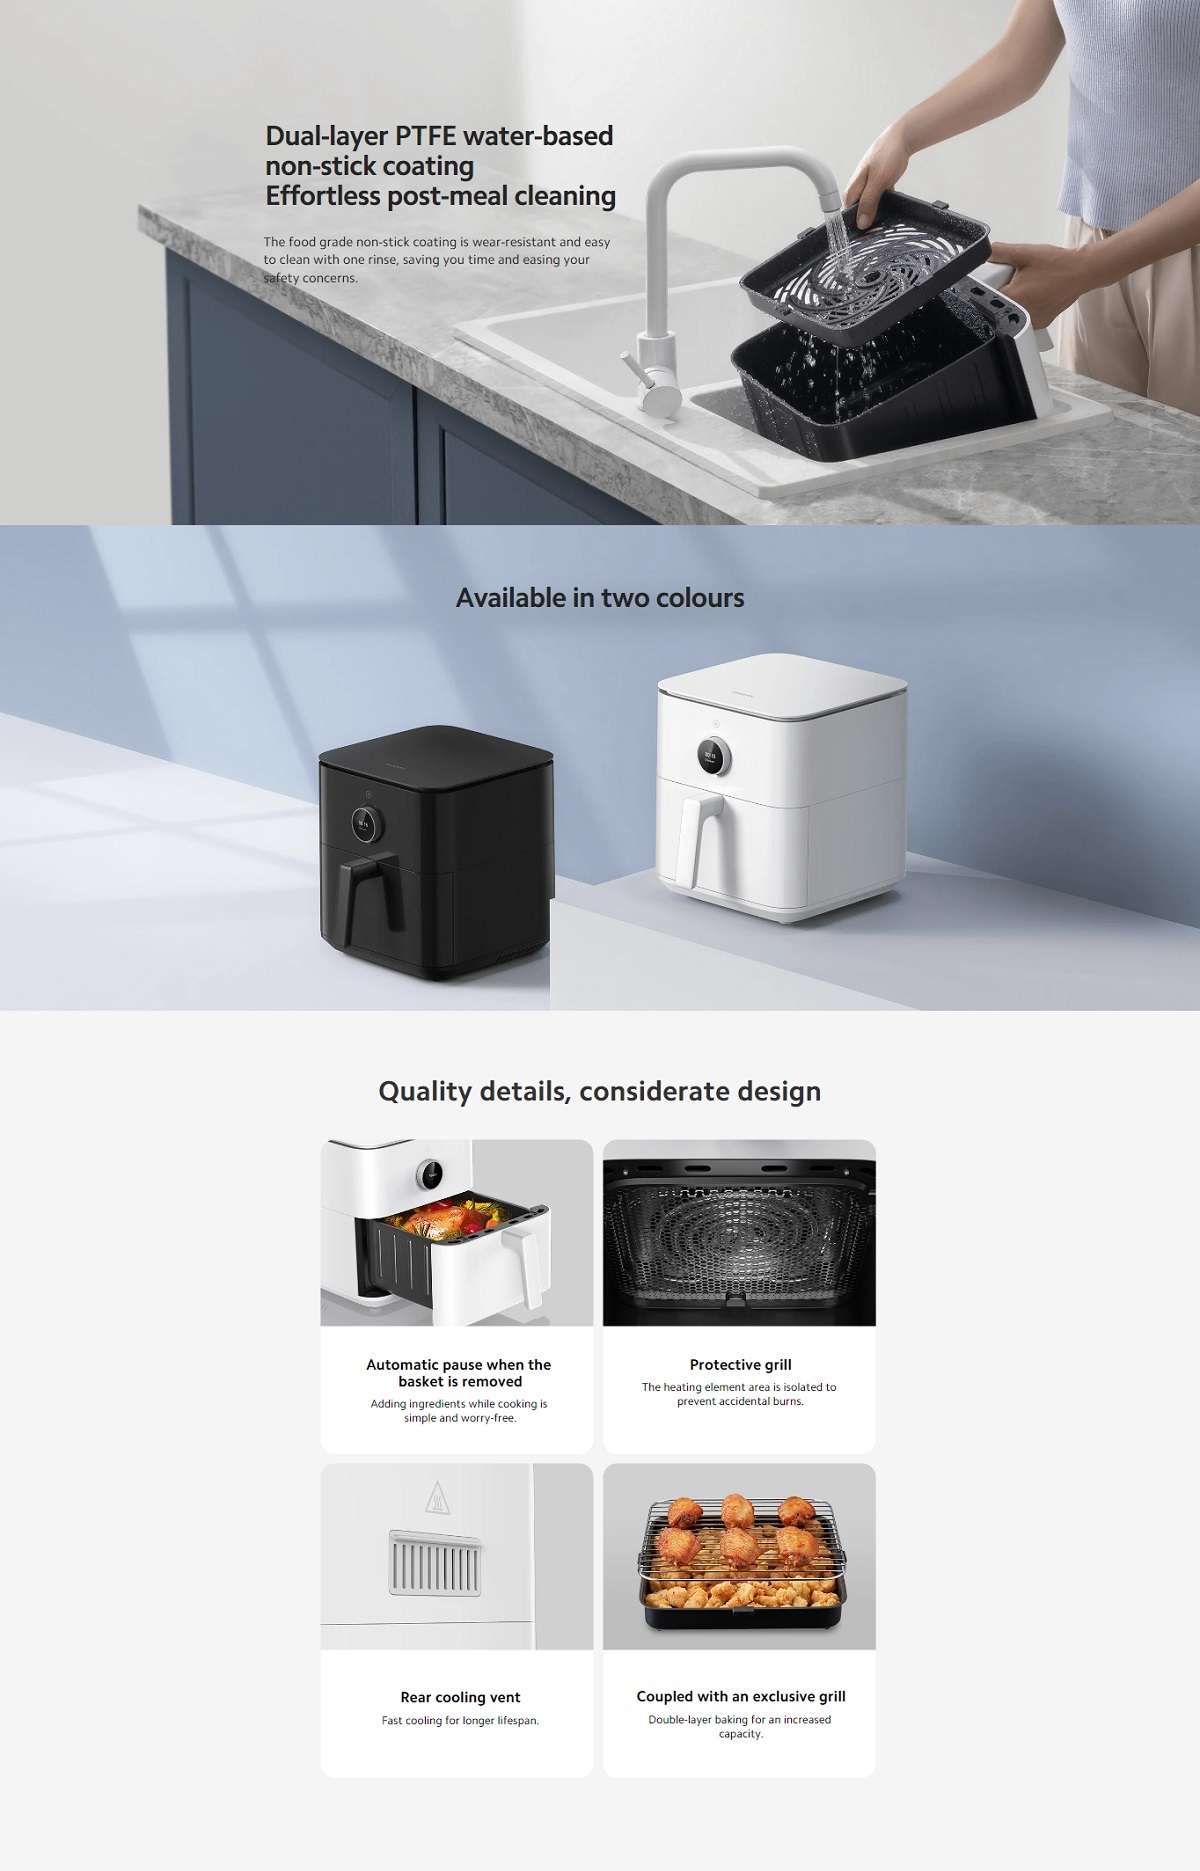 Buy Xiaomi Smart Air Fryer 6.5L (Black) for HKD 649.00, Home Appliances